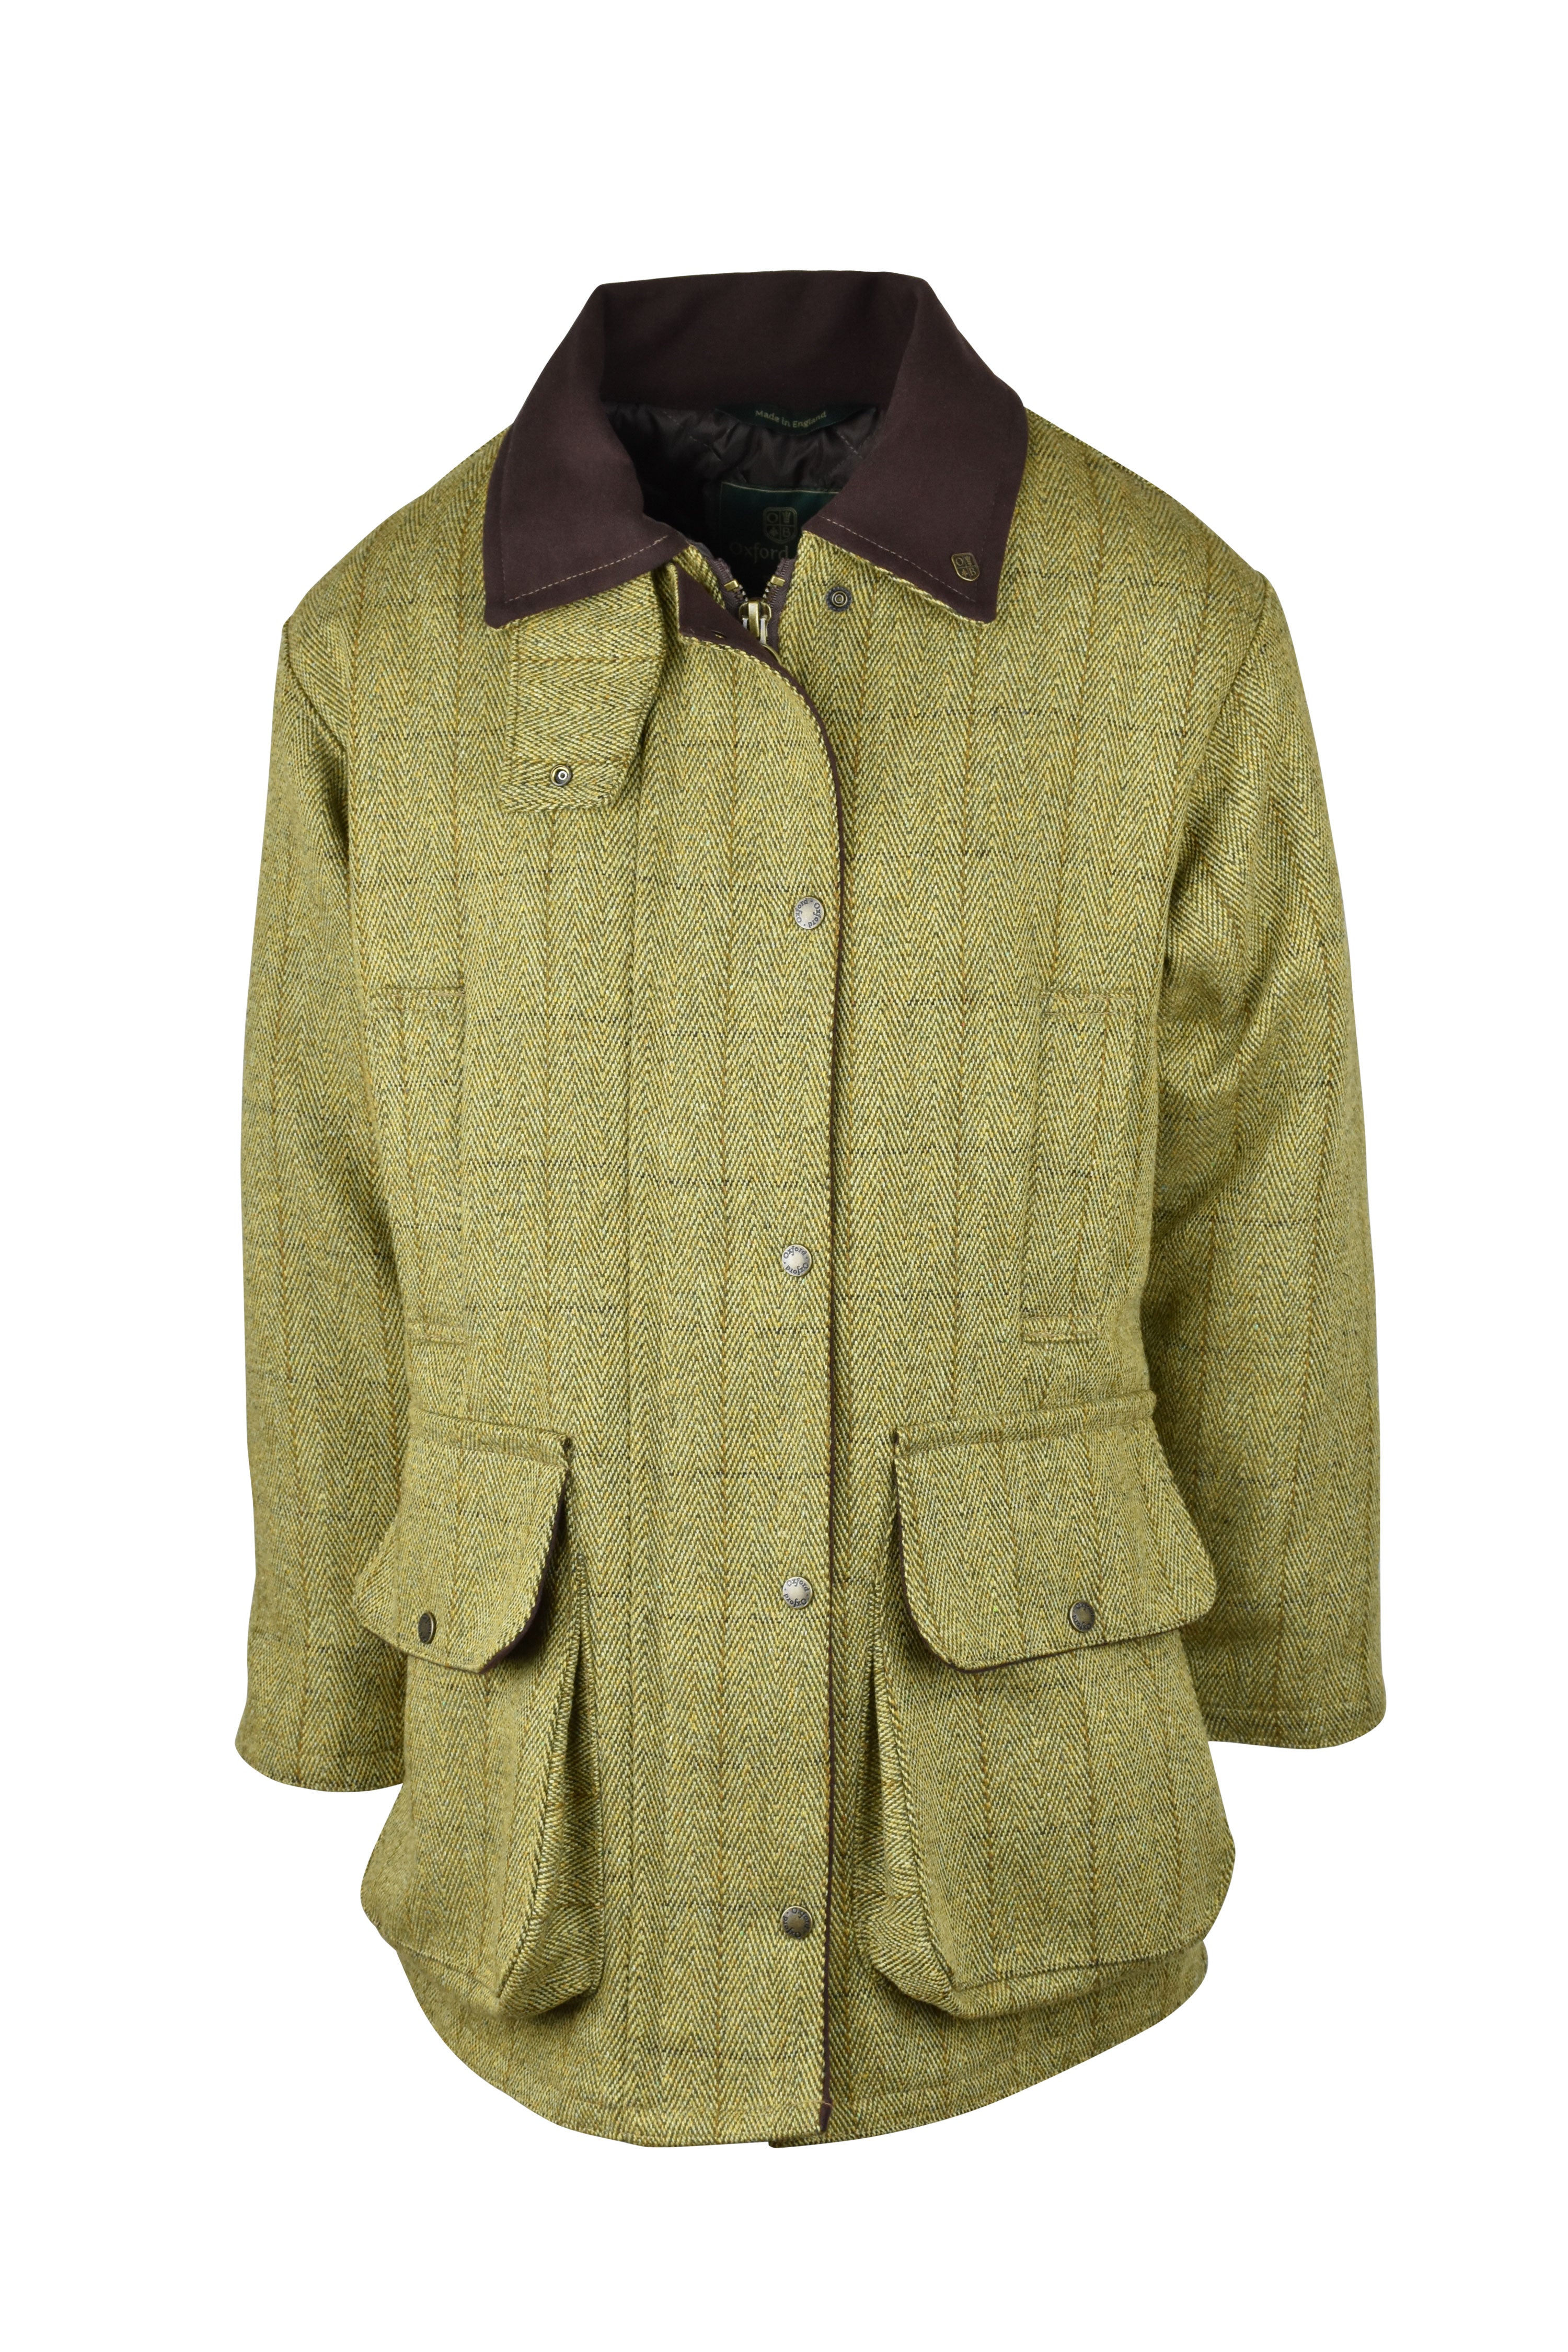 Oxford Blue Tweed Coat Flash Sales | bellvalefarms.com